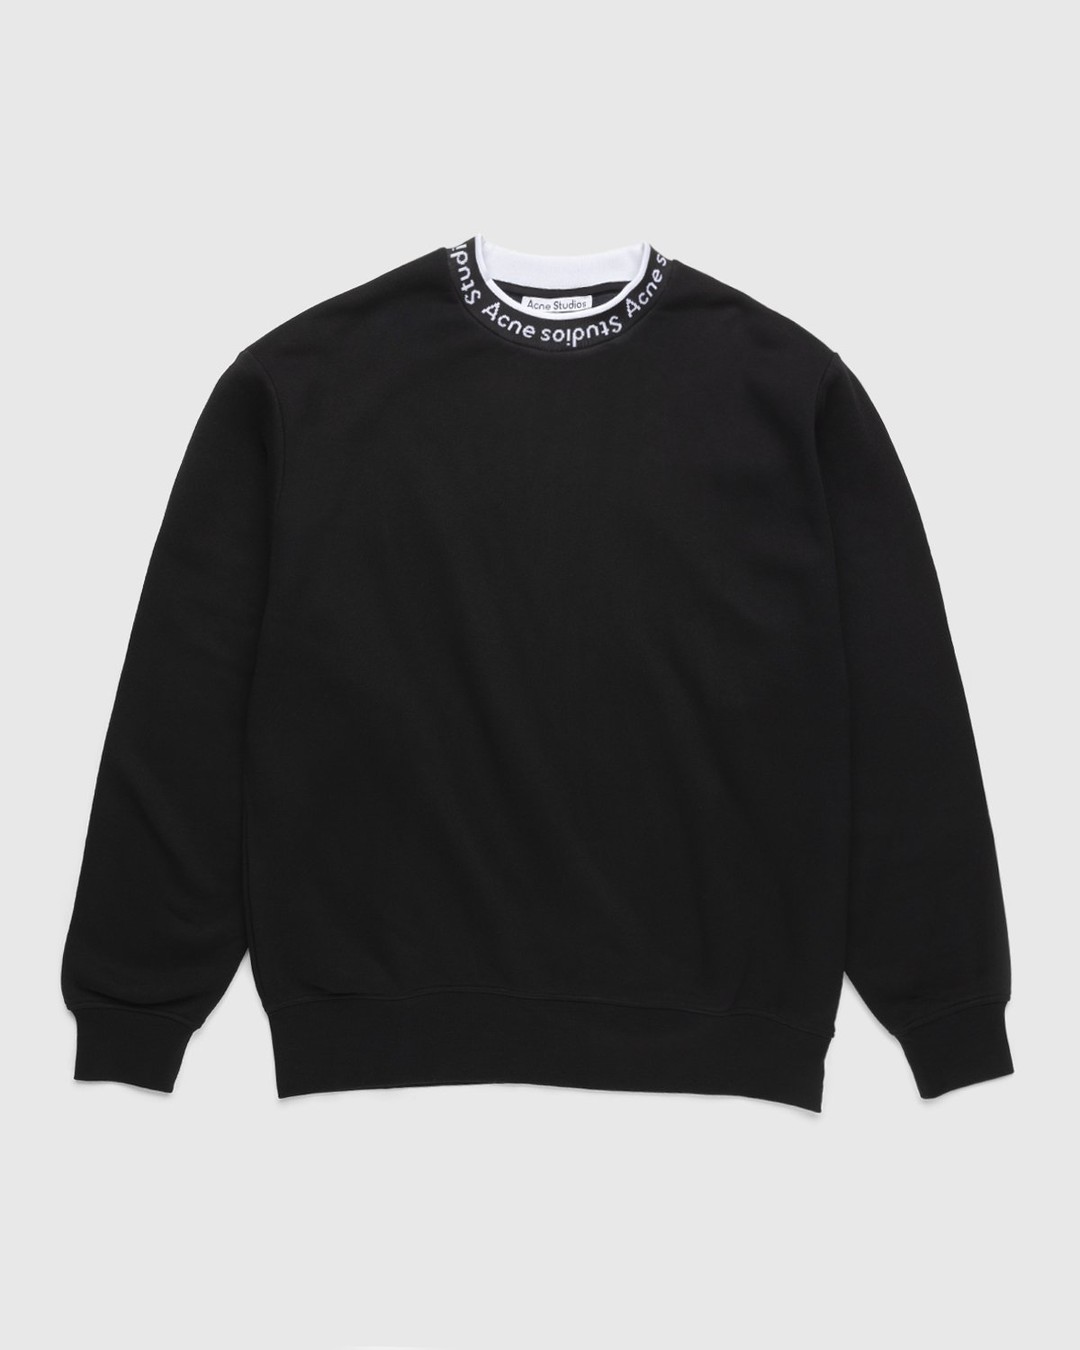 Acne Studios – Logo Rib Sweatshirt Black - Sweats - Black - Image 1